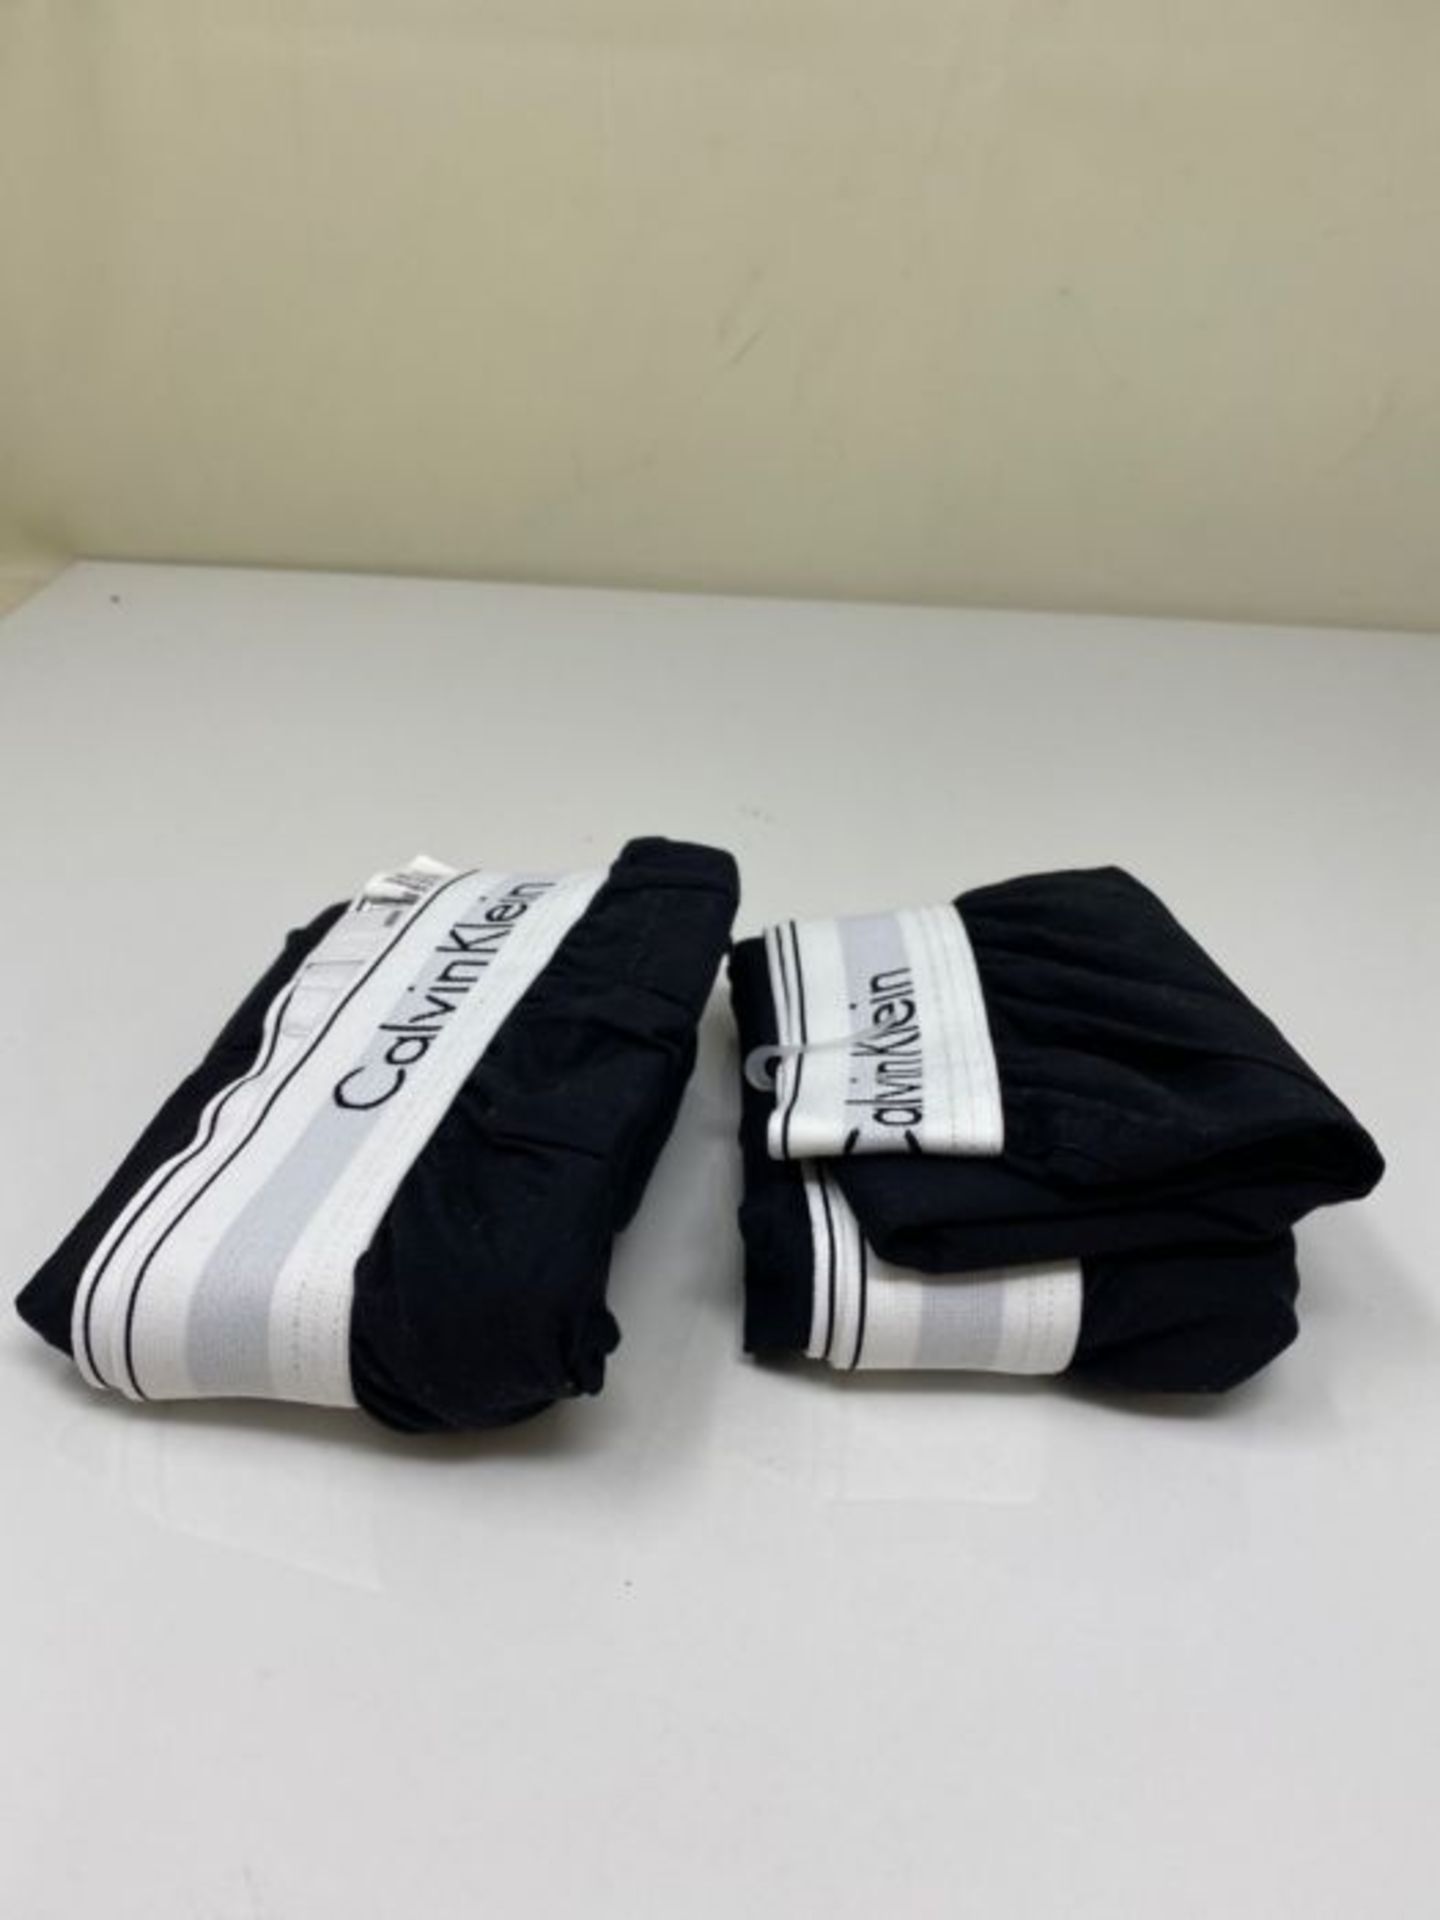 Calvin Klein Men's 2 Pack Slim Fit Boxers, Boxer Shorts,Multicoloured (Black/black), M - Image 3 of 3